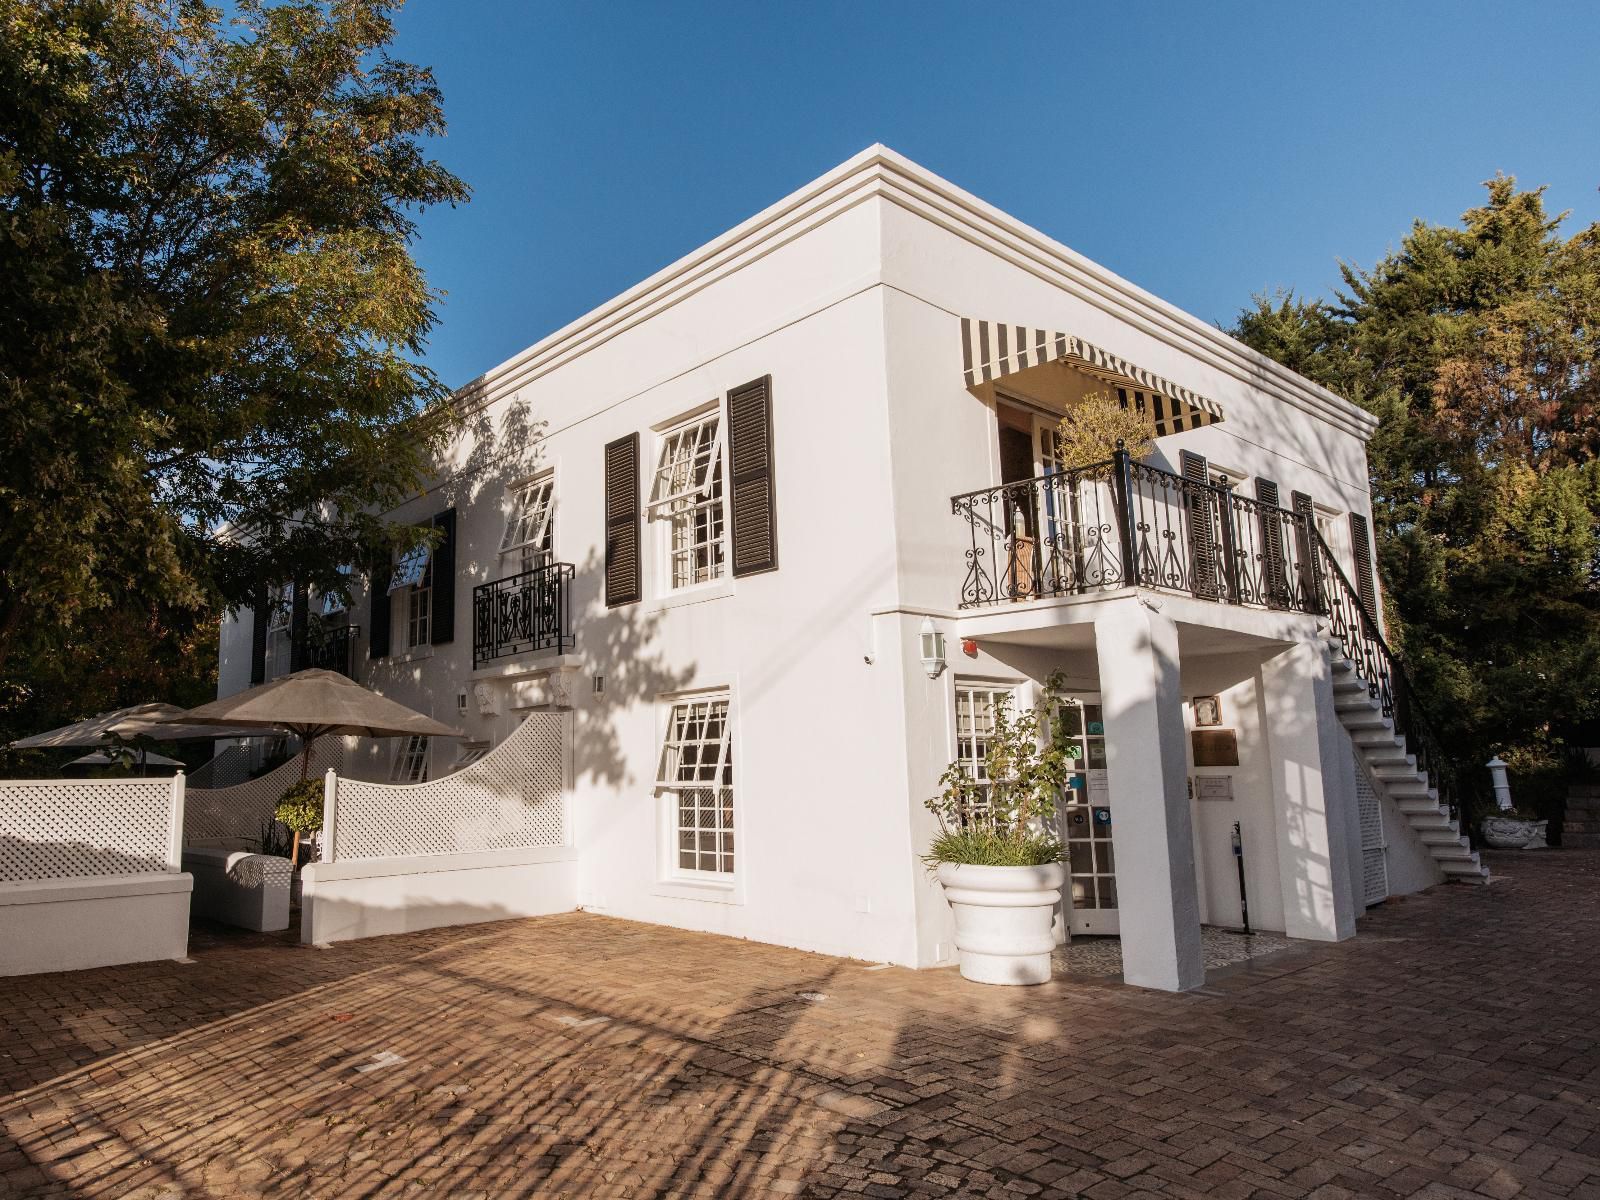 Maison Chablis Guest House Franschhoek Western Cape South Africa House, Building, Architecture